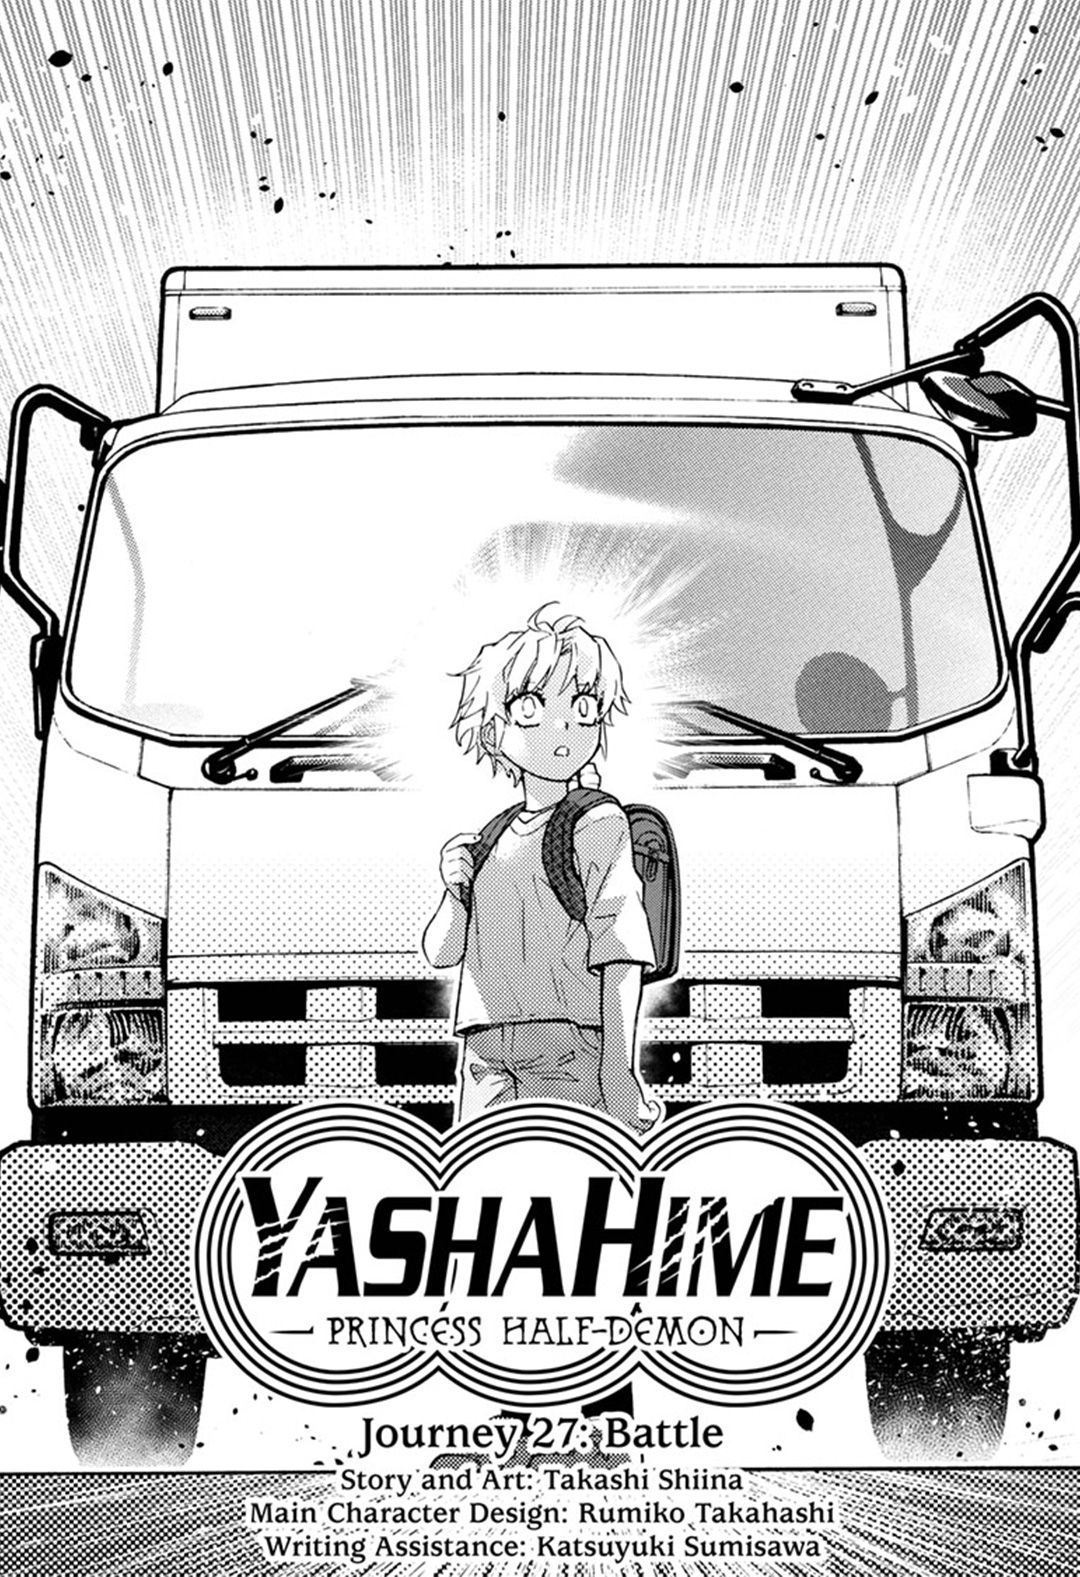 VIZ  Read Yashahime: Princess Half-Demon, Chapter 24 - Explore